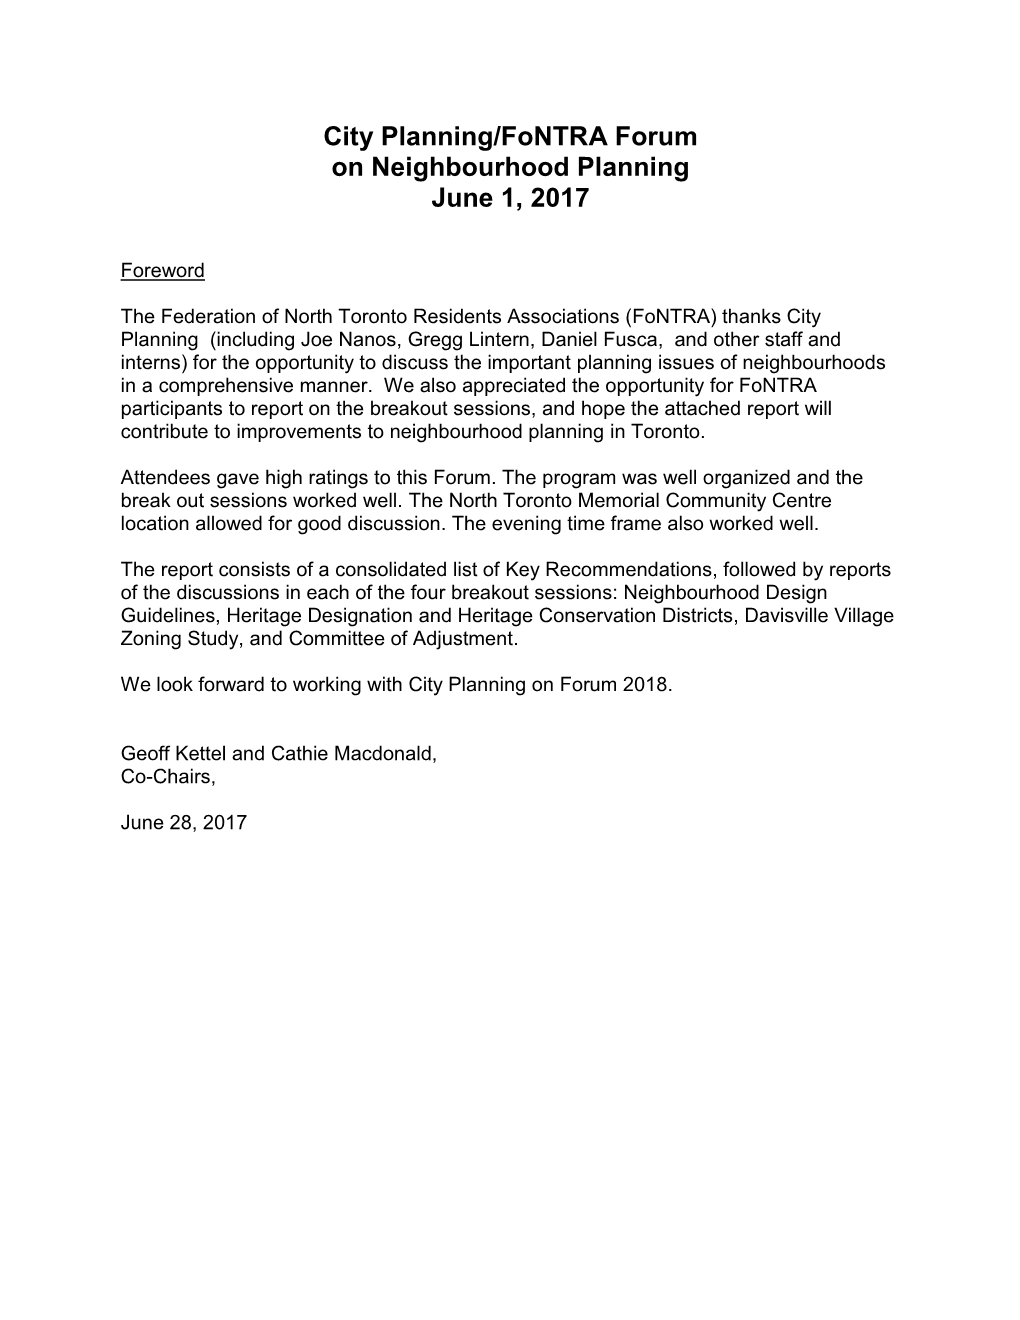 City Planning/Fontra Forum on Neighbourhood Planning June 1, 2017